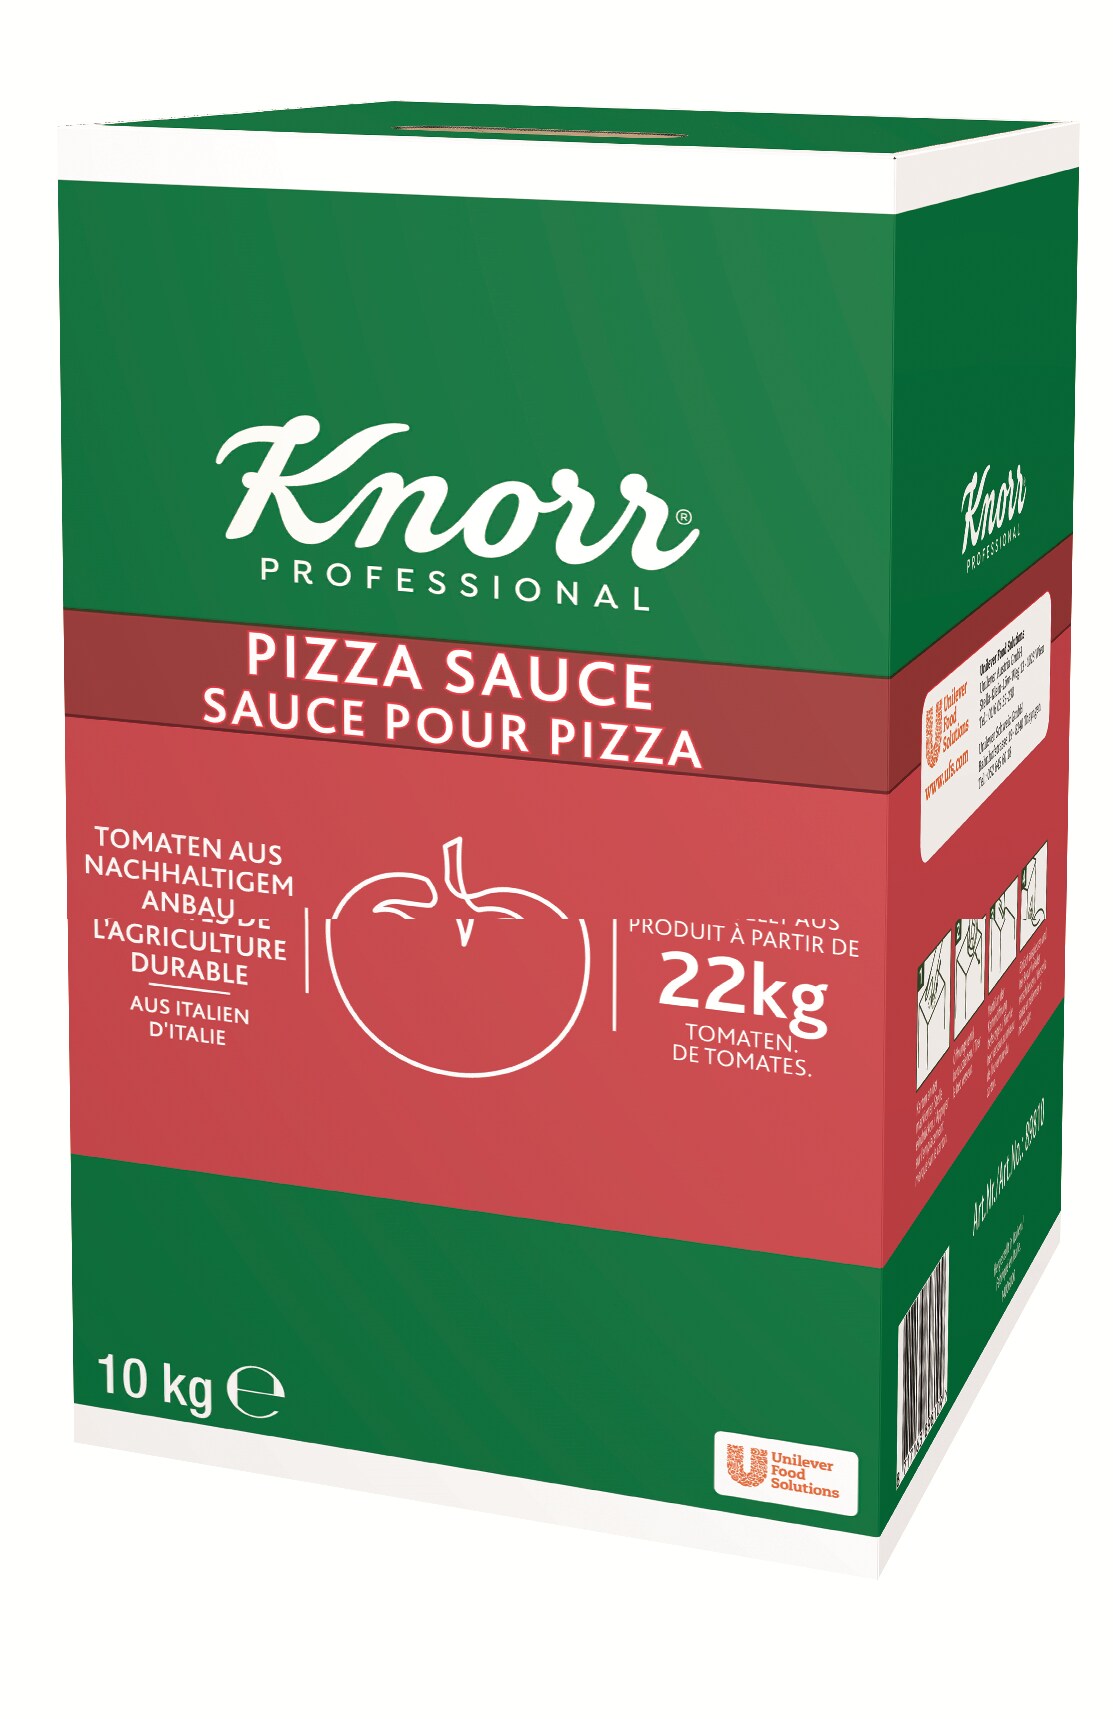 Passata przetarte pomidory Knorr Professional 10kg - 